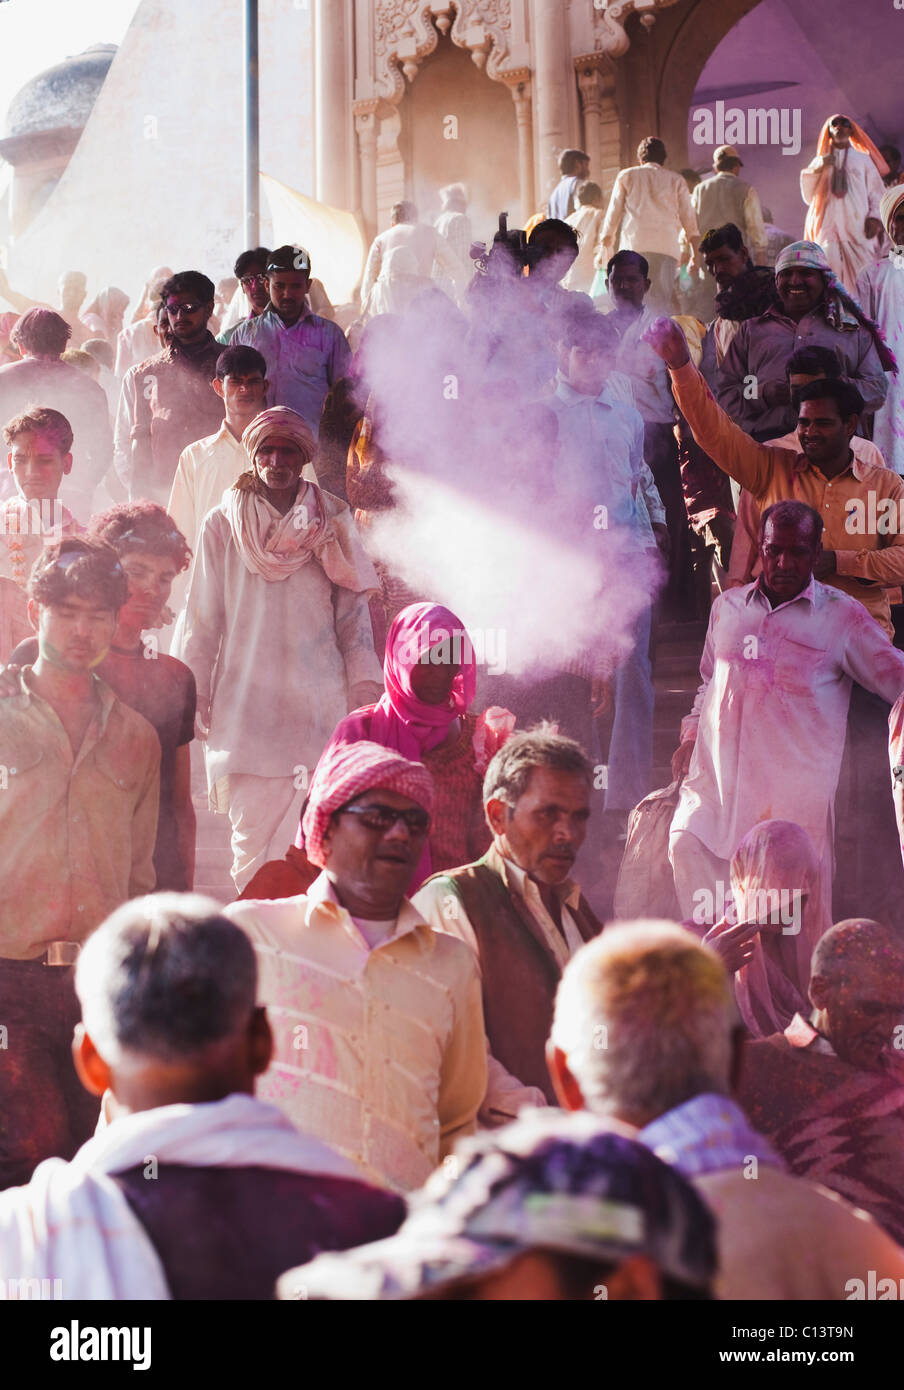 Group of people celebrating Holi festival, Barsana, Uttar Pradesh, India Stock Photo